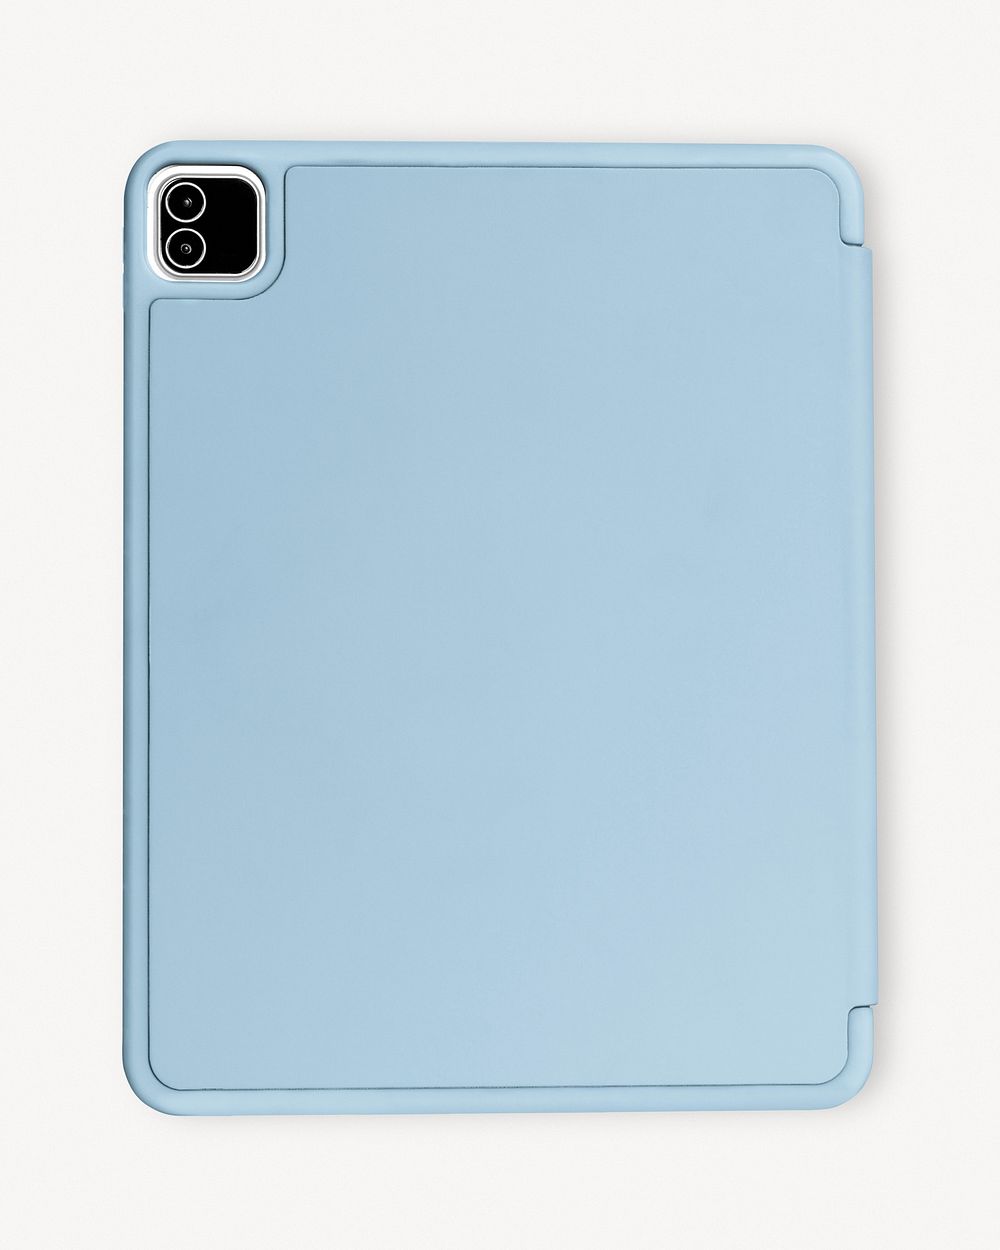 Blue tablet case, rear view